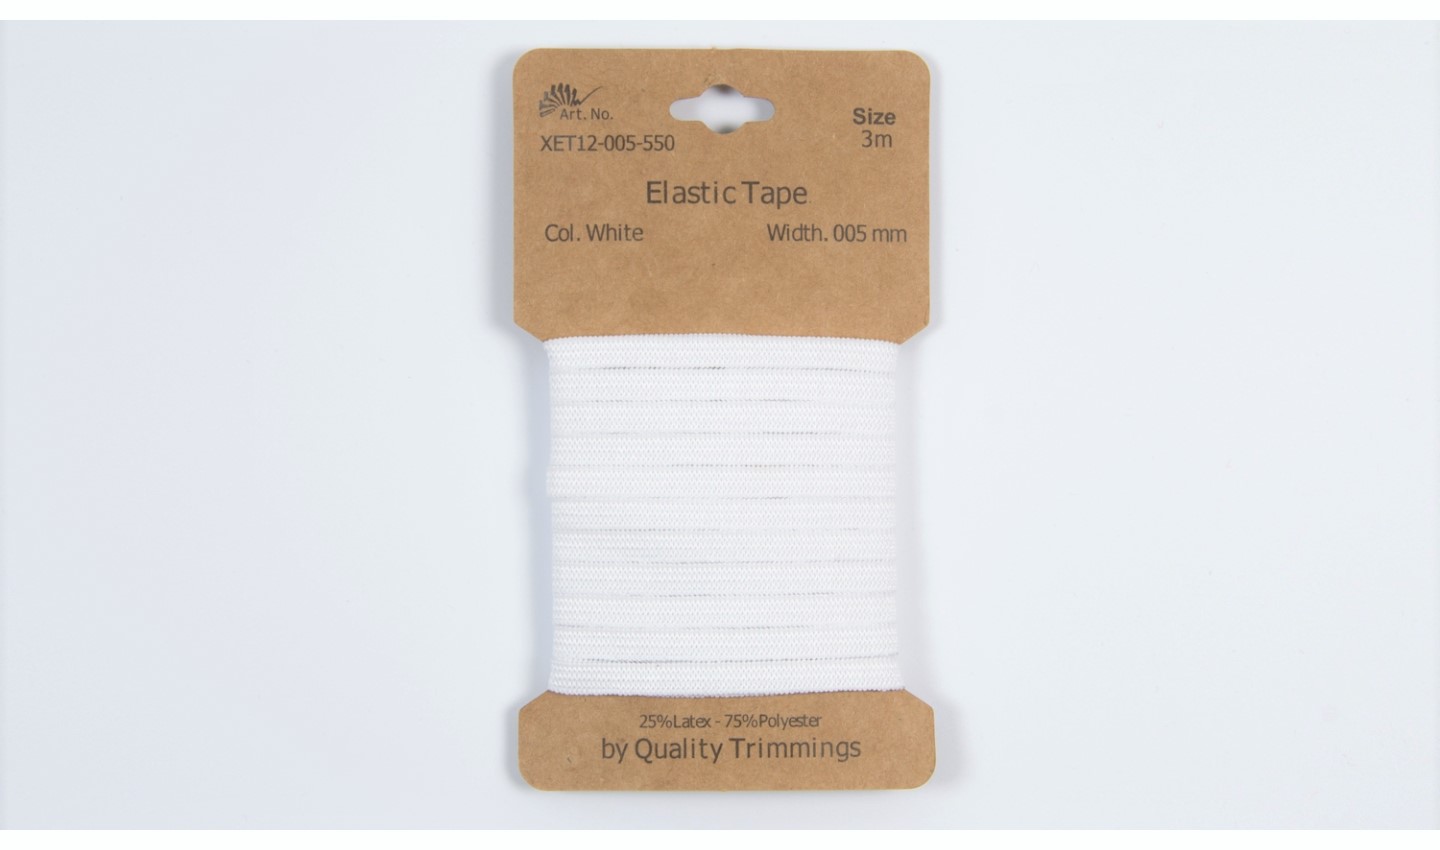 Karte 3m Elastik Gummi 5mm breit in white (550) 